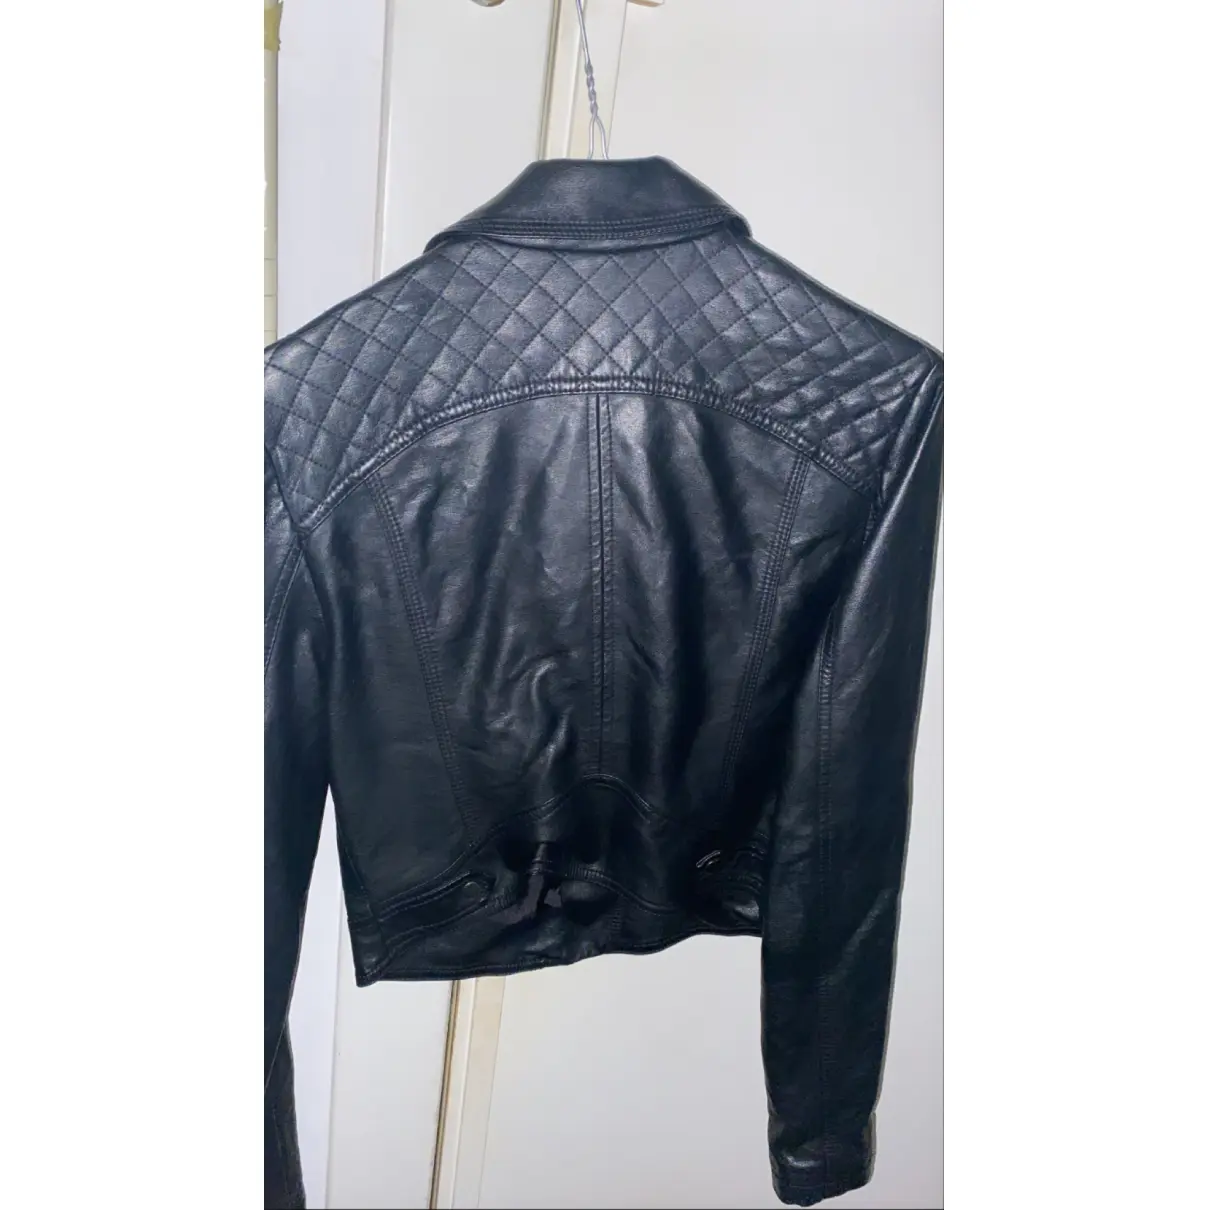 Buy TALLY WEIJL Leather jacket online